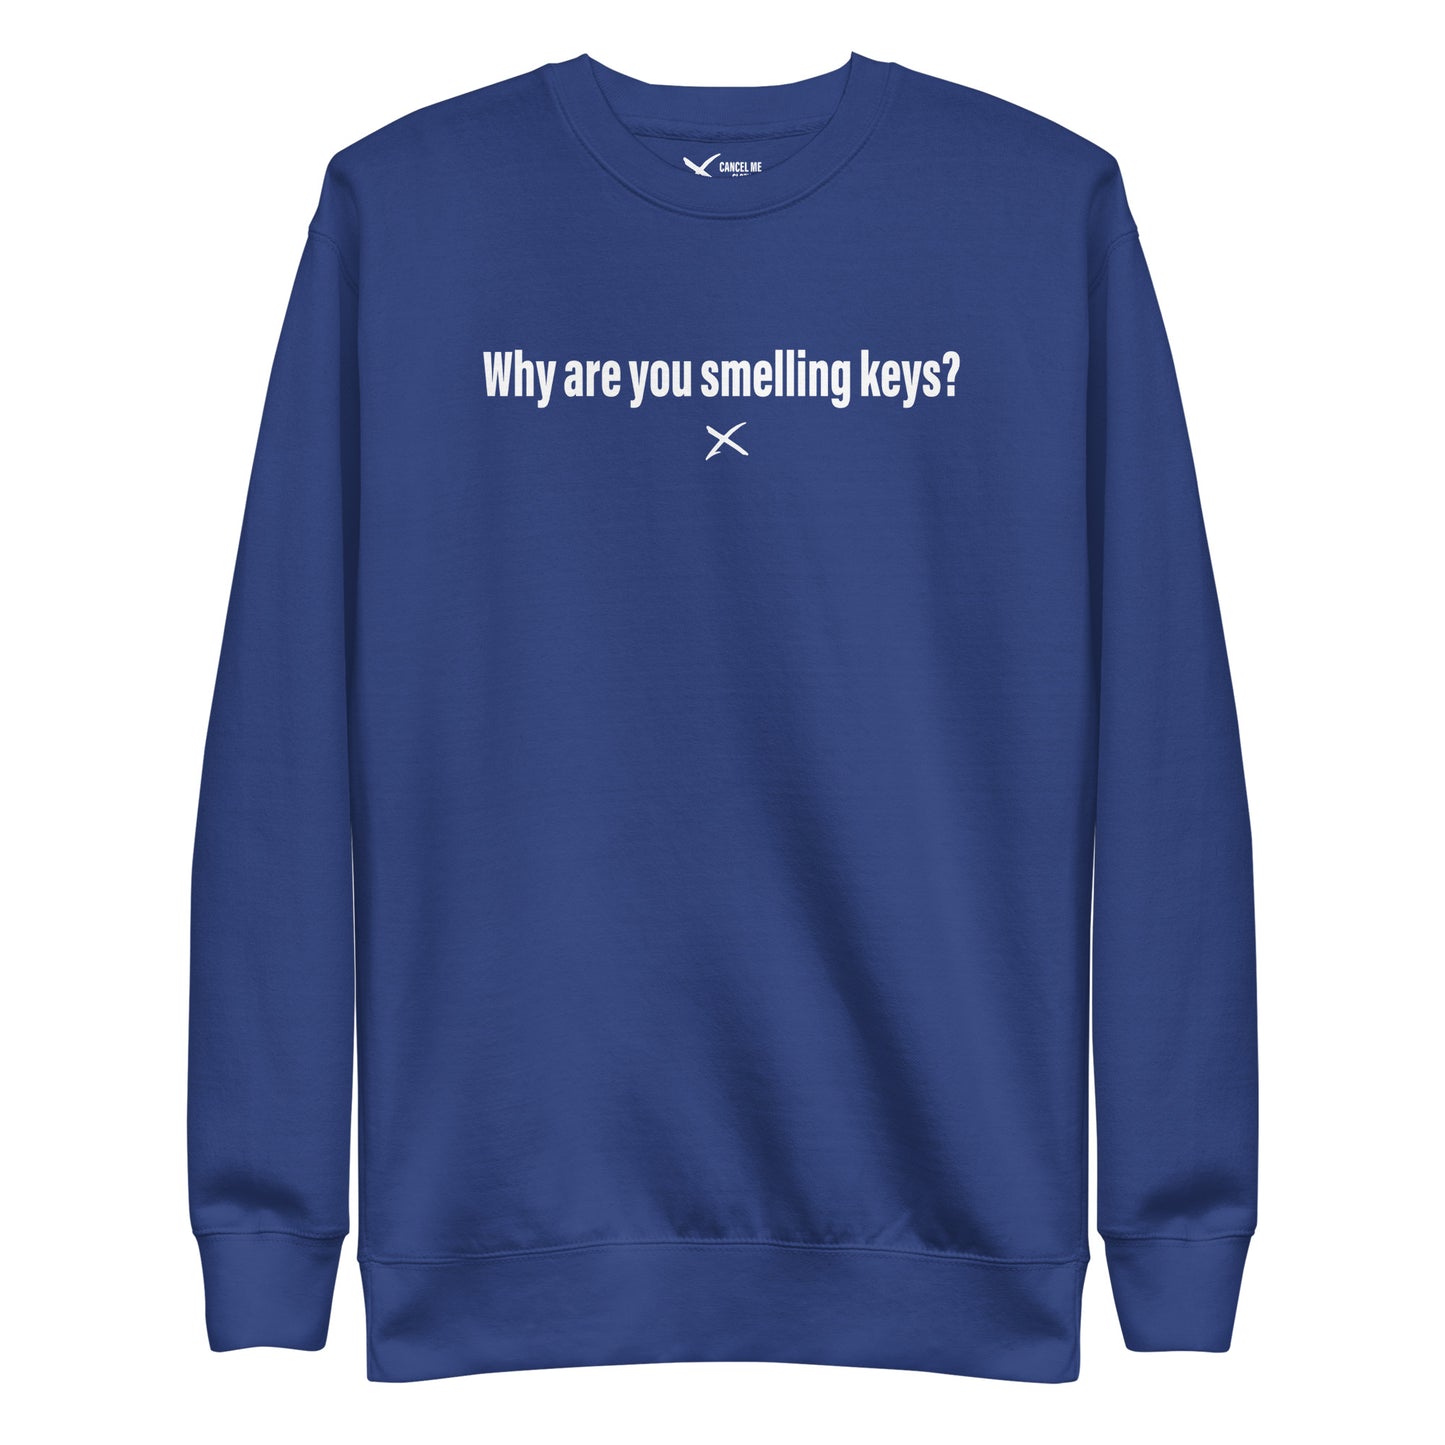 Why are you smelling keys? - Sweatshirt